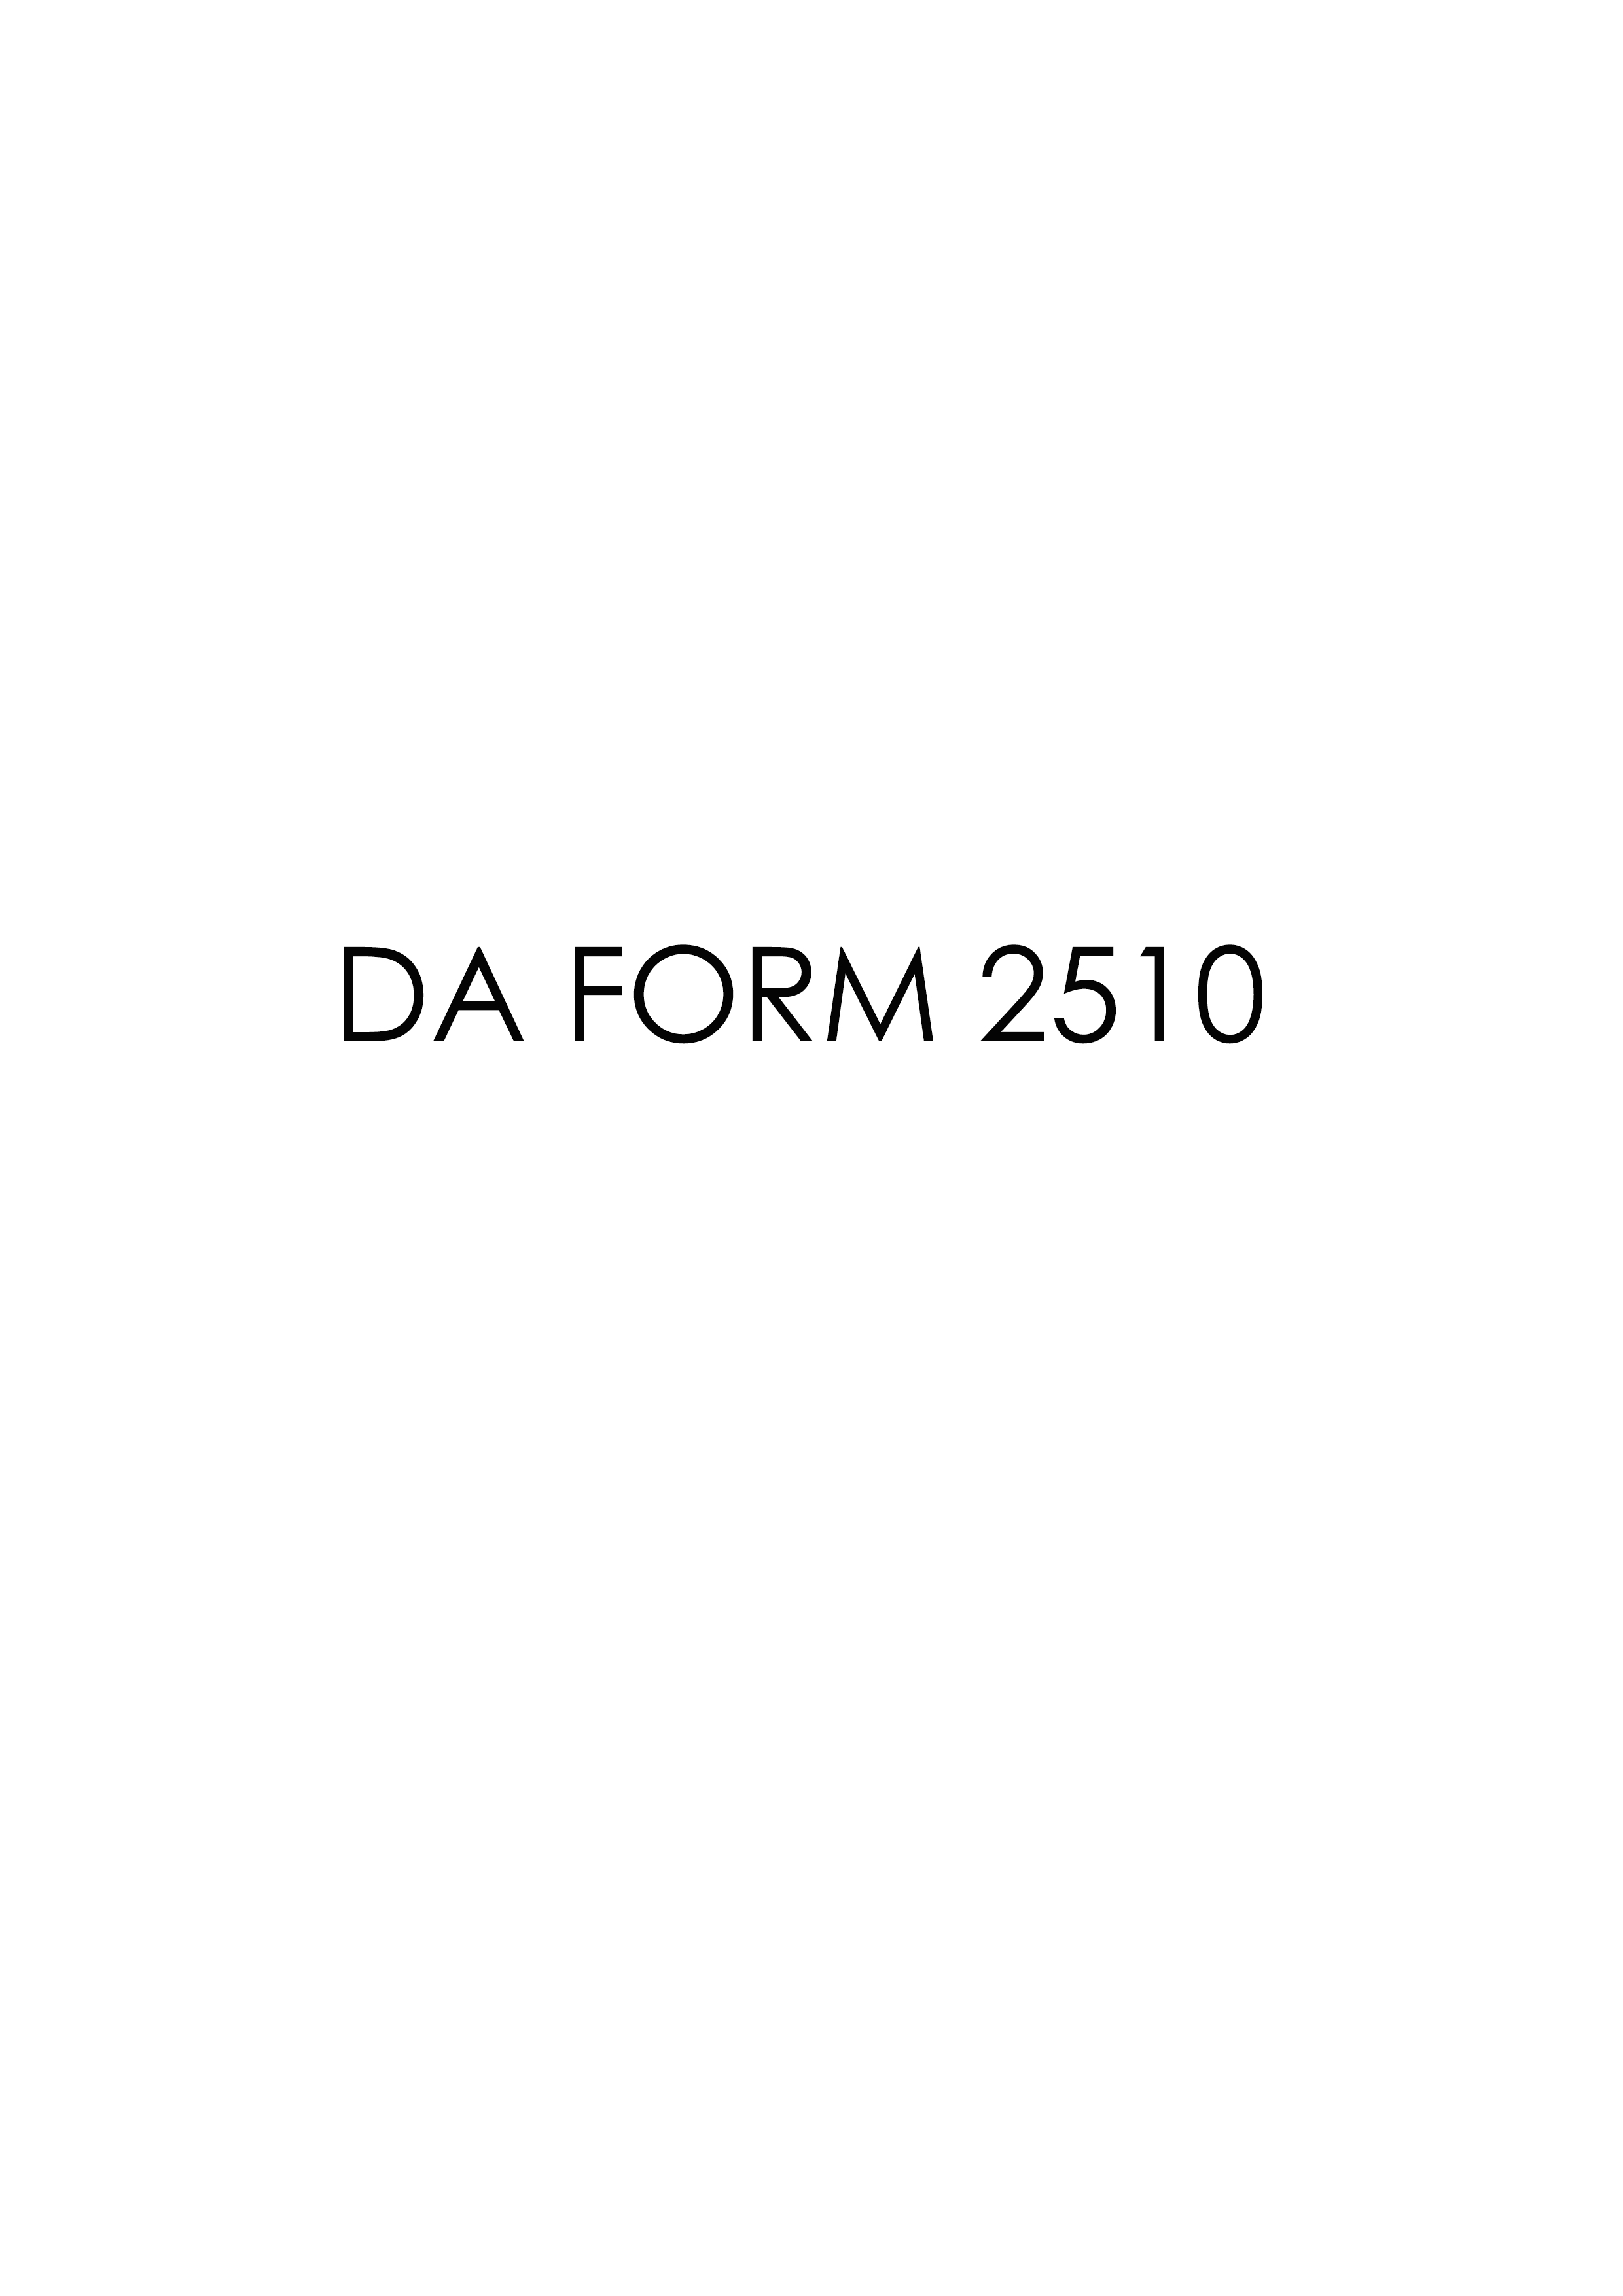 Download da 2510 Form